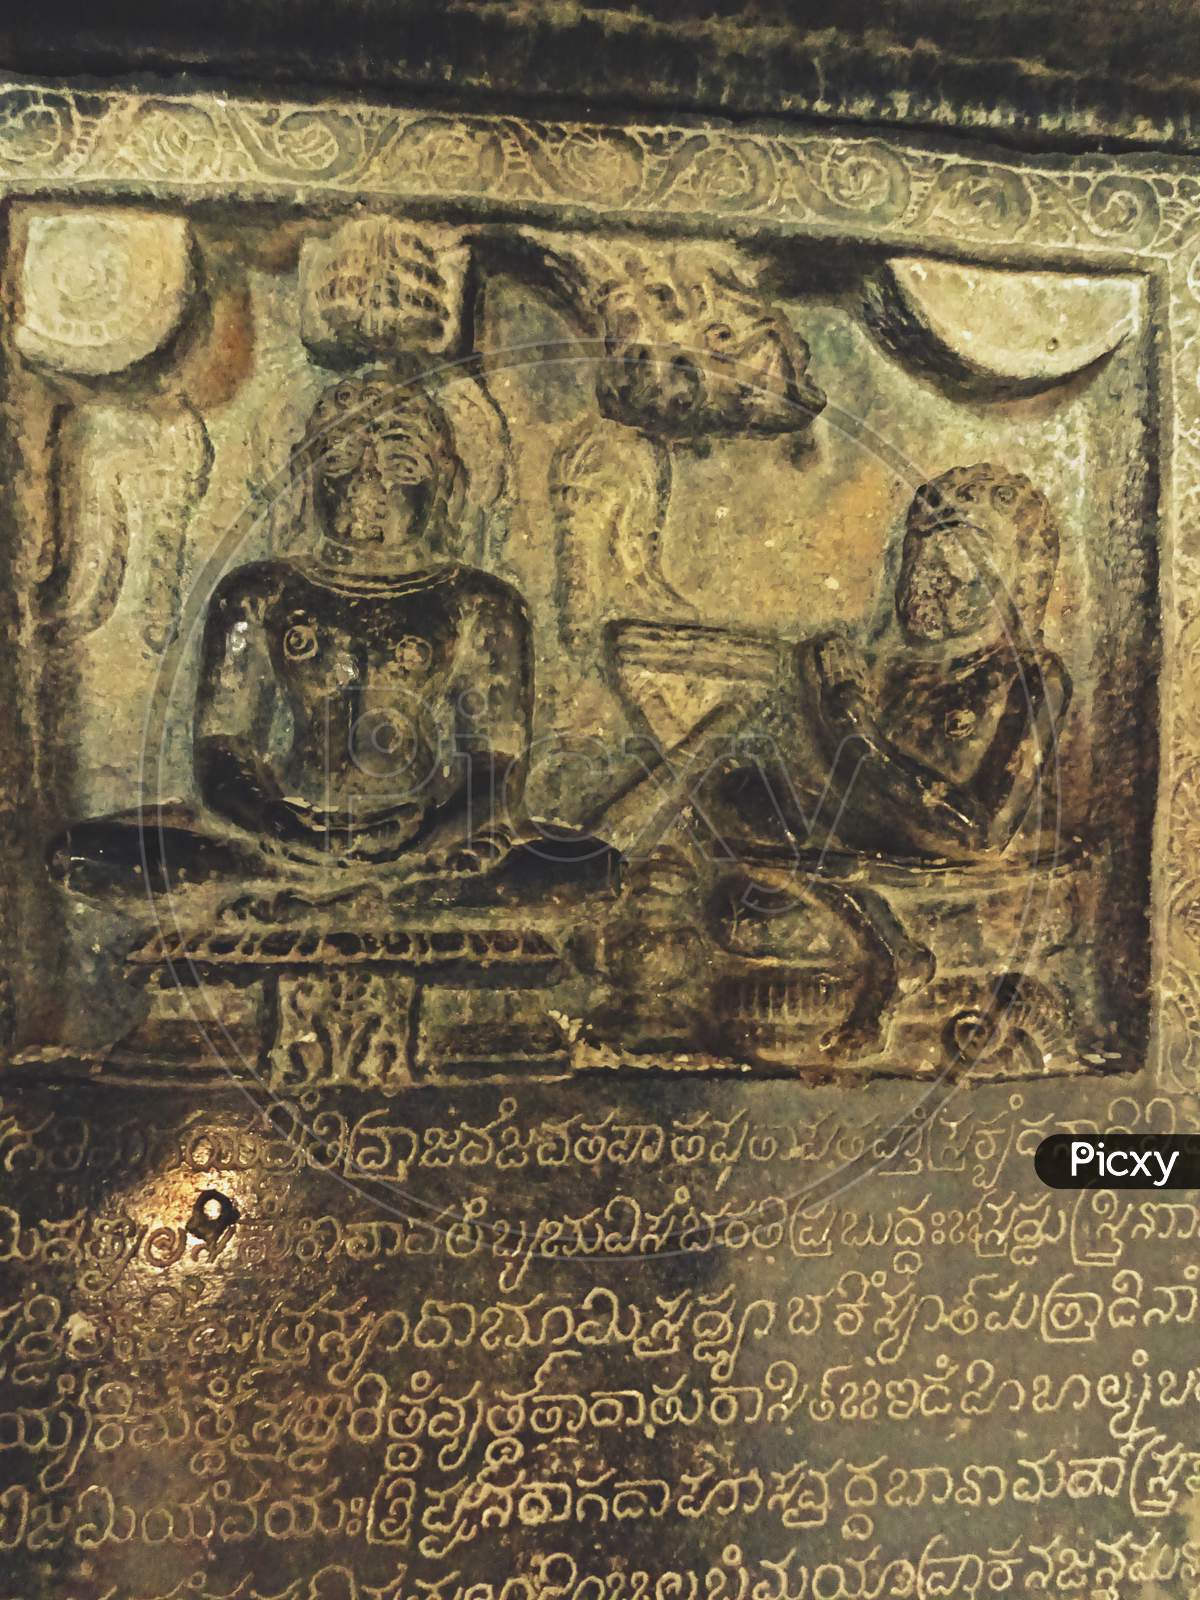 Lord Gomateswara, Bahubali, Jainism, Shravanabelagola